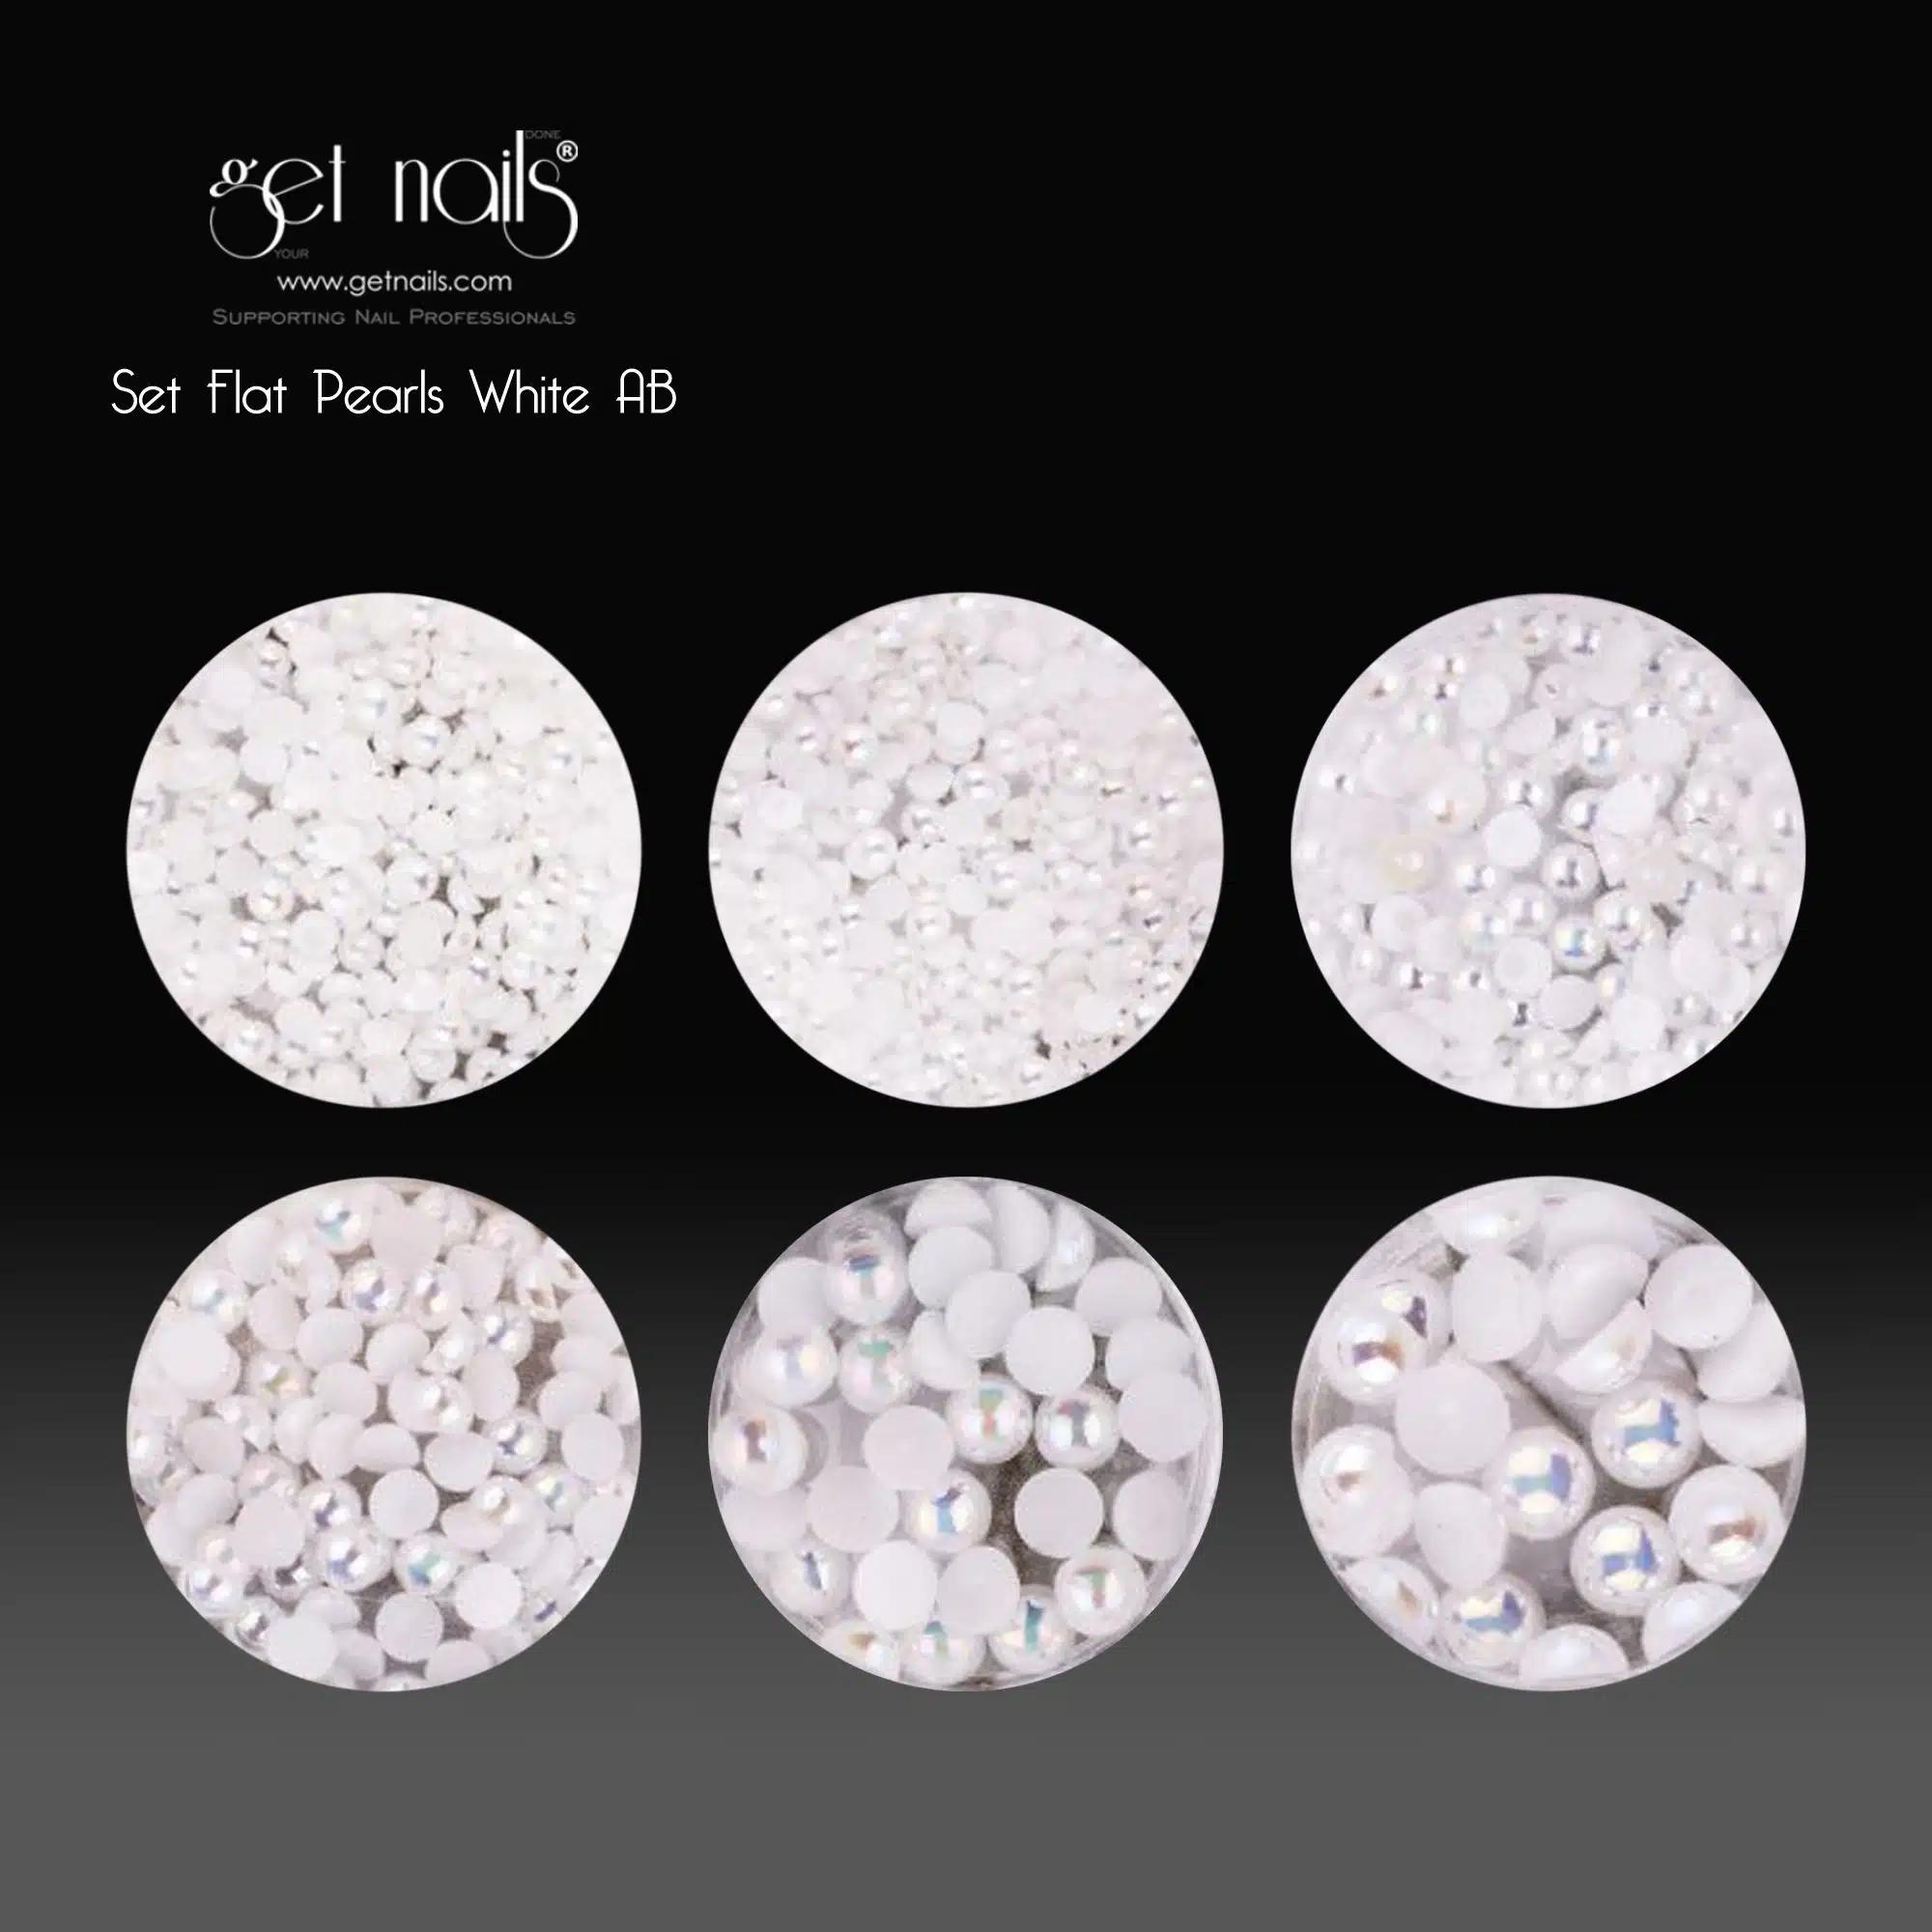 Get Nails Austria - Набор Flat Pearls White AB